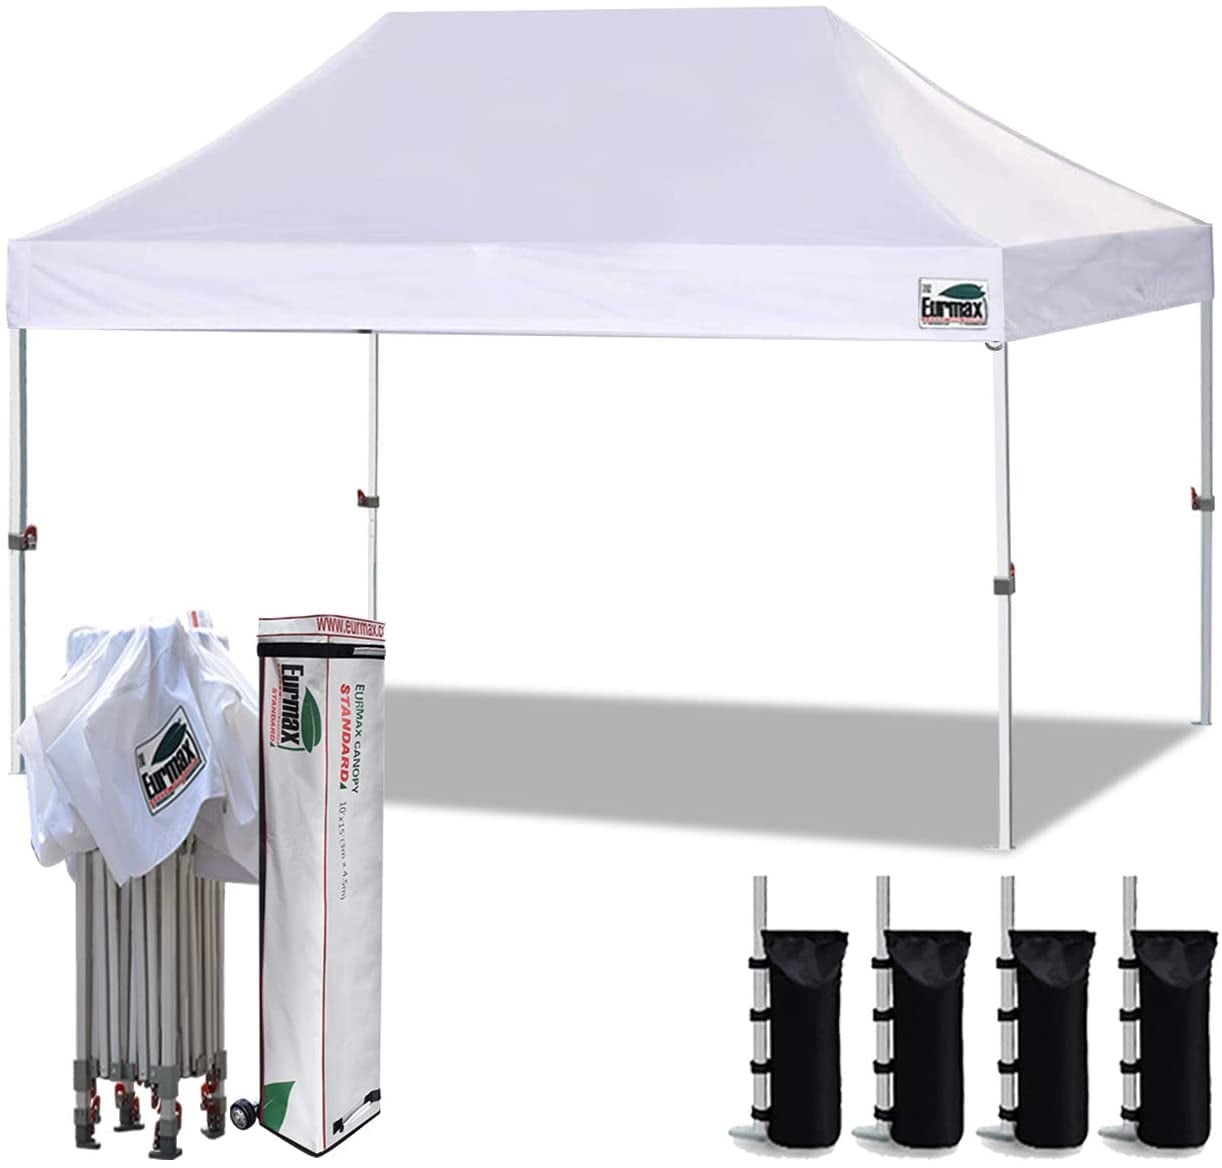 Details about   10x10Ft Ez Pop Up Canopy Outdoor Party Tent Instant Shelter With 4PCS Sandbags 